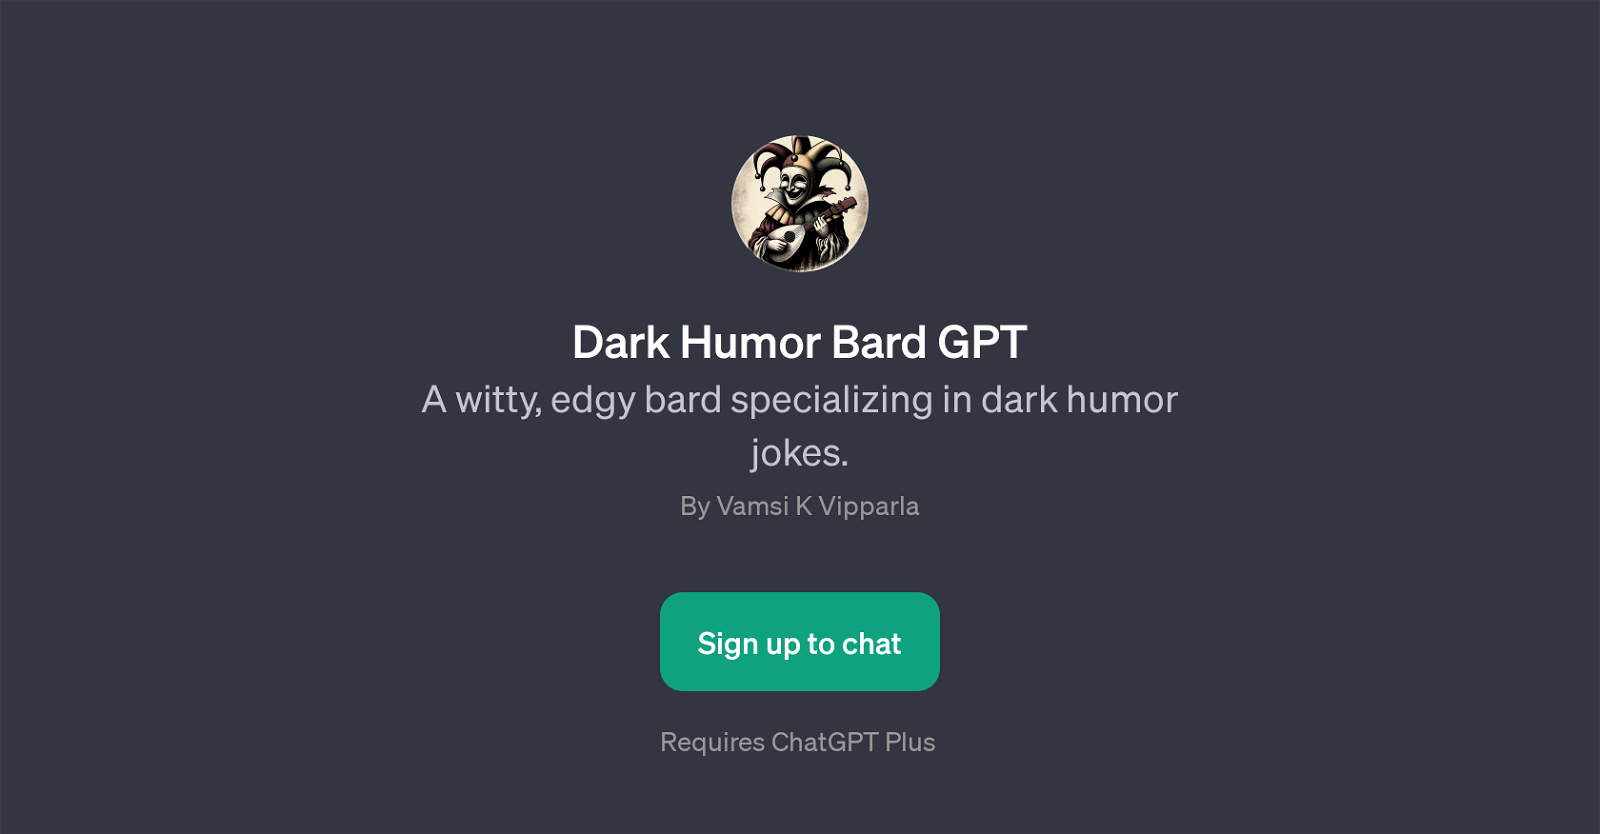 Dark Humor Bard GPT website